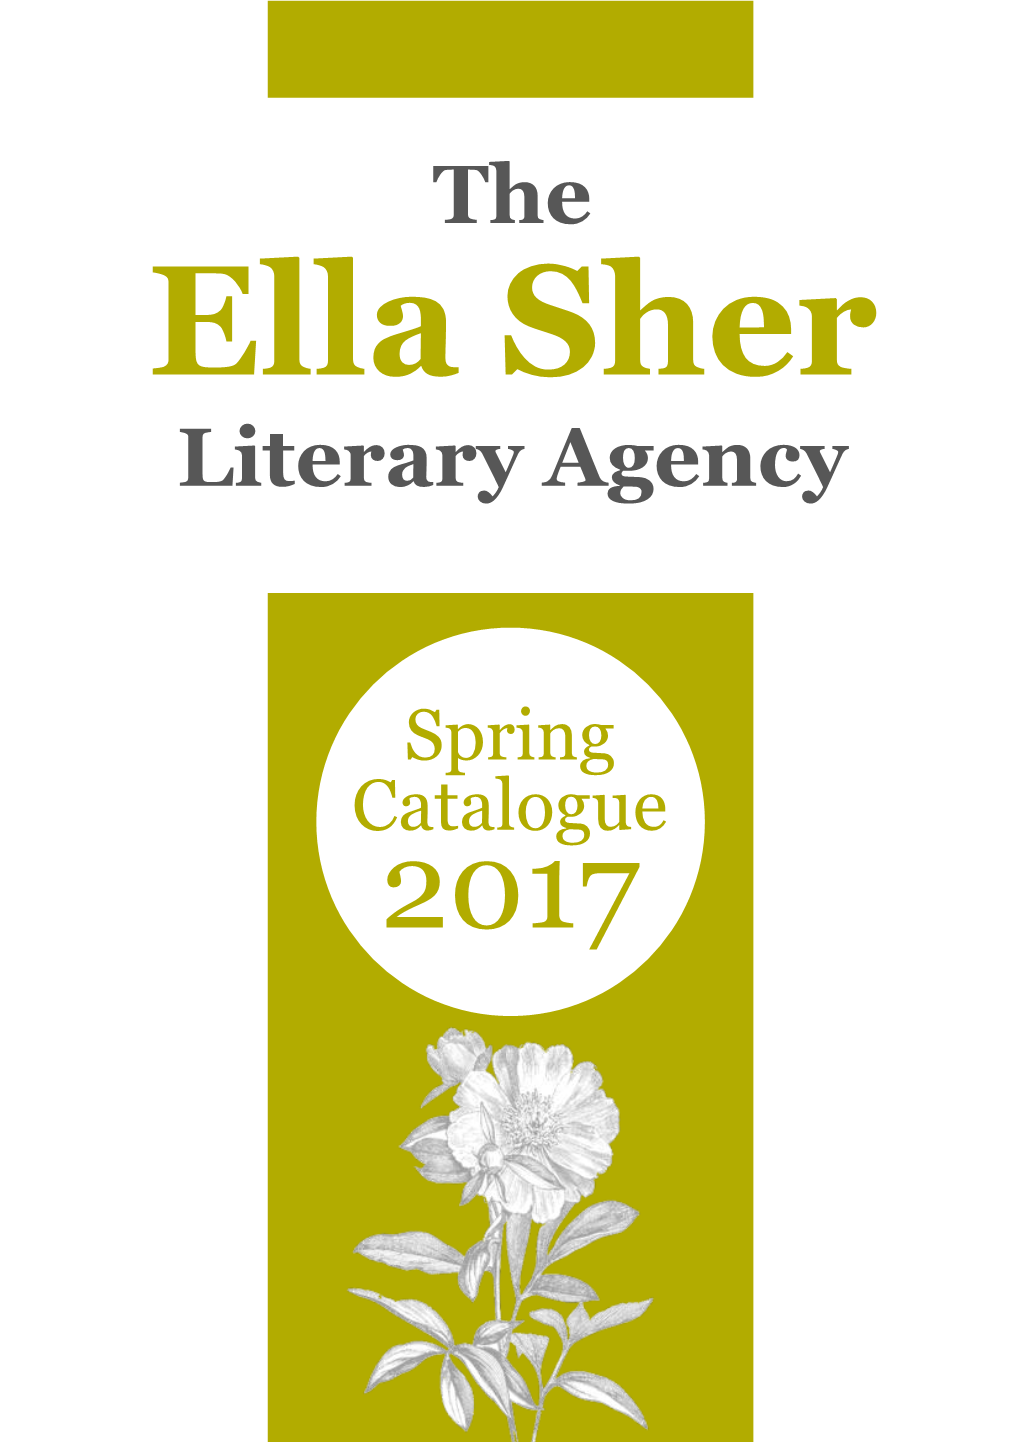 The Literary Agency